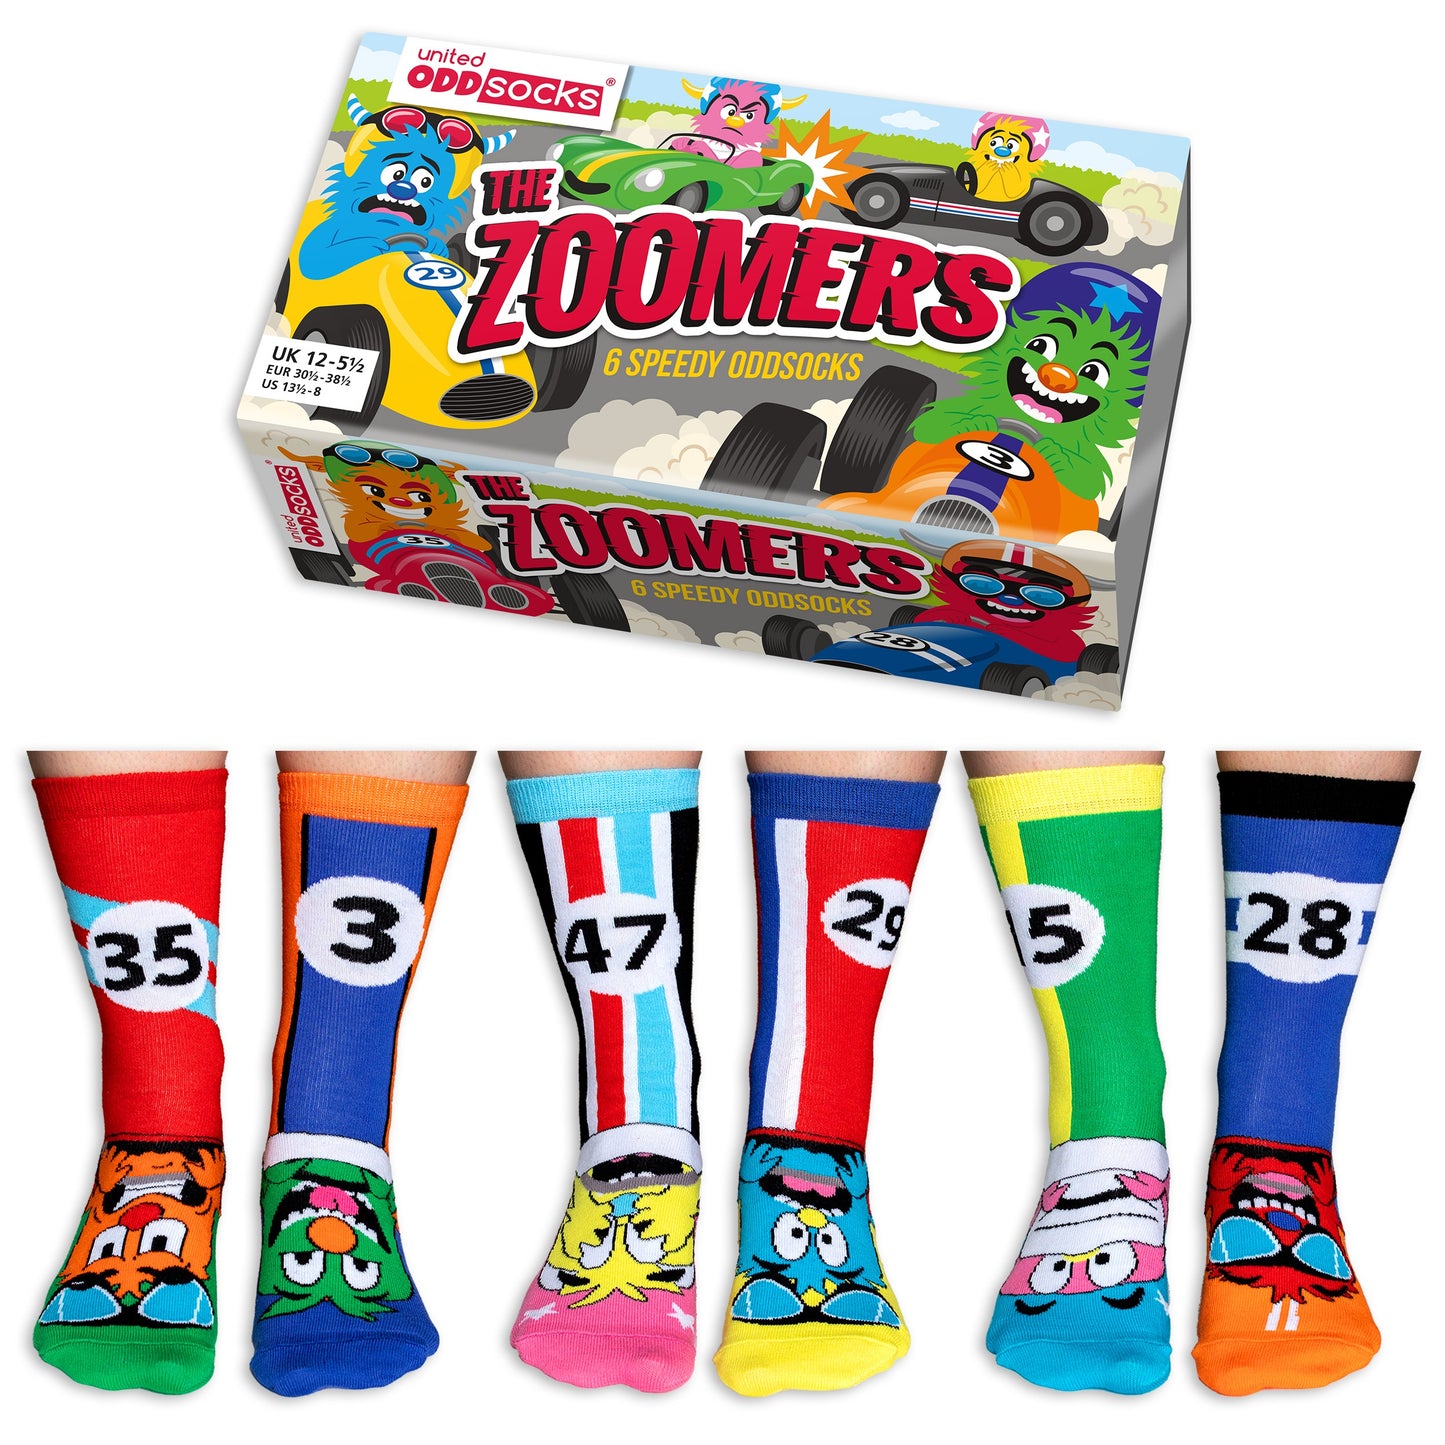 United Oddsocks "The Zoomers" Kids Set Of 6 Odd Socks